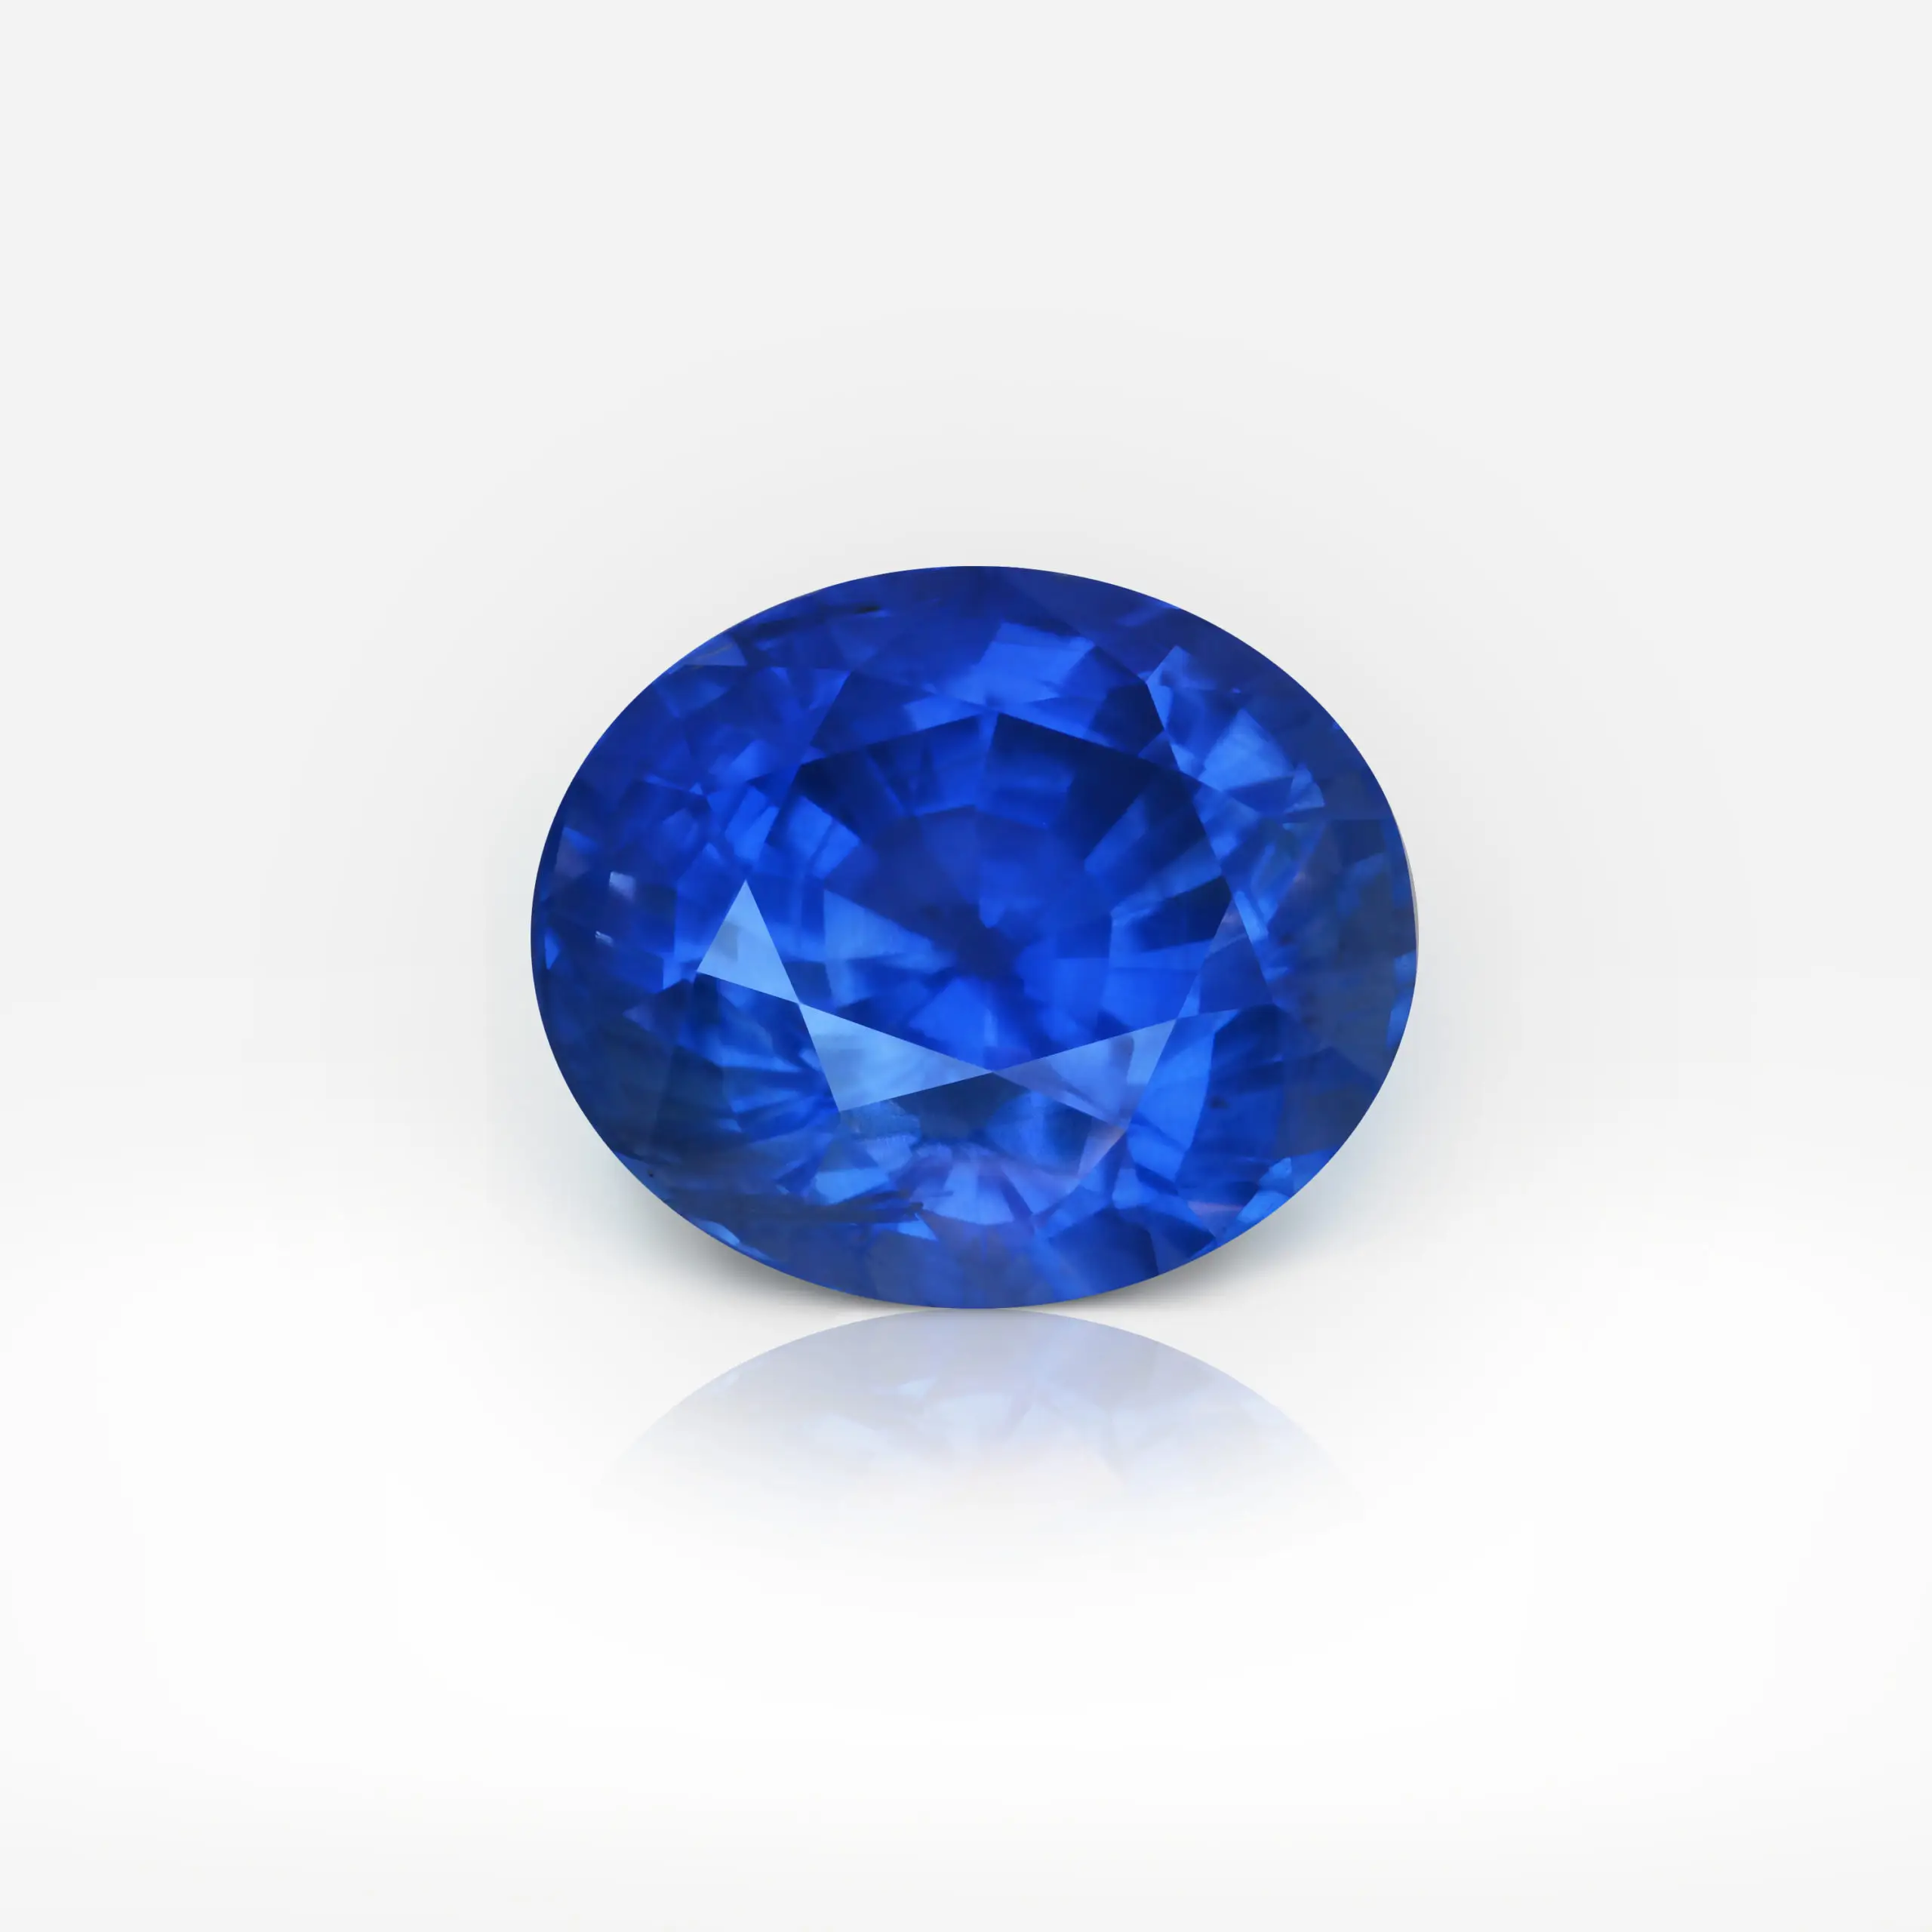 17.73 carat Oval Shape Sri Lankan Blue Sapphire - picture 1